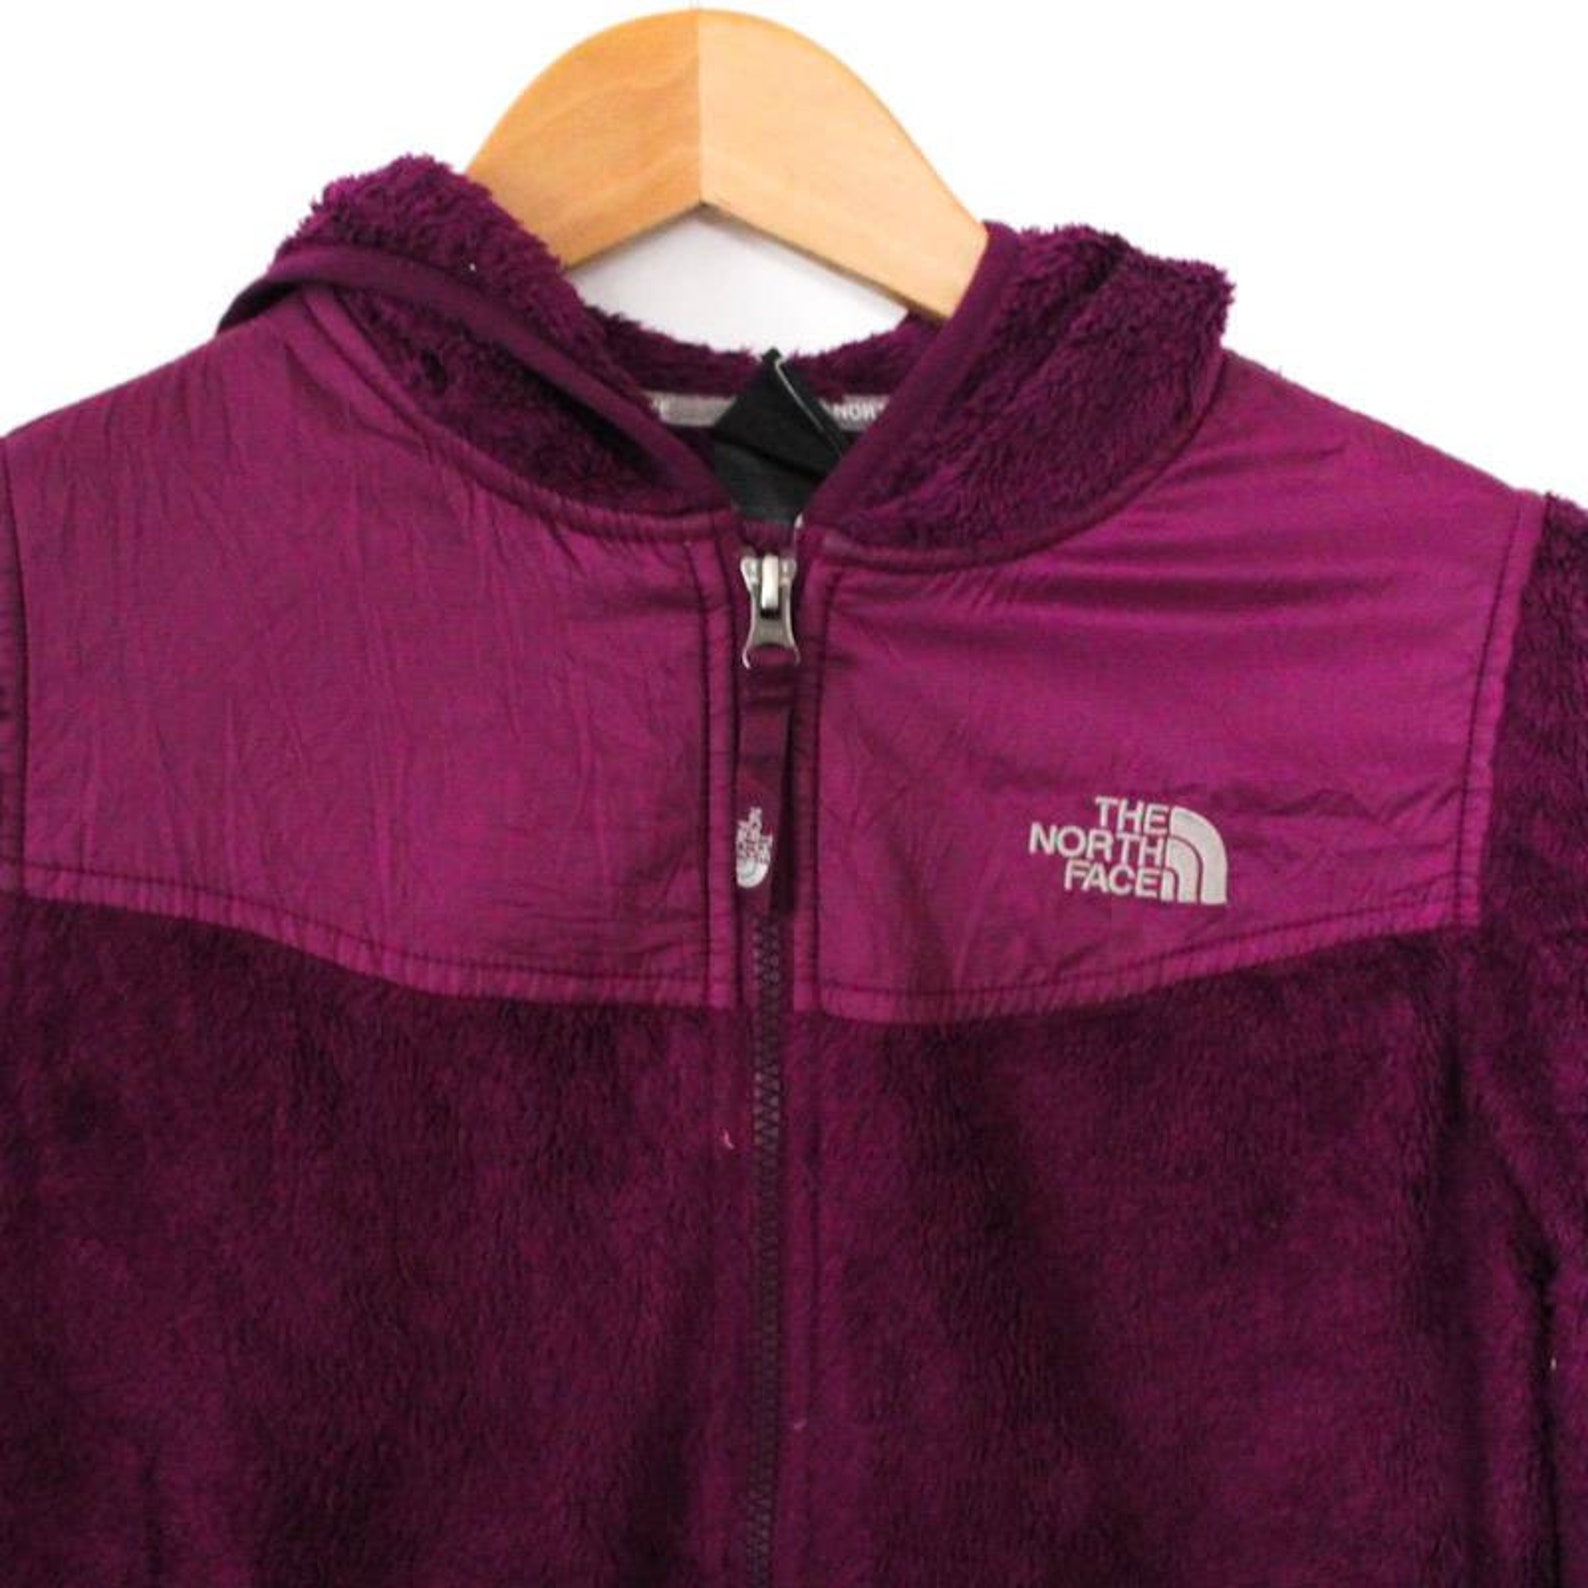 Retro The North Face Purple Fleece Teddy Bear Zip Up Jacket | Etsy